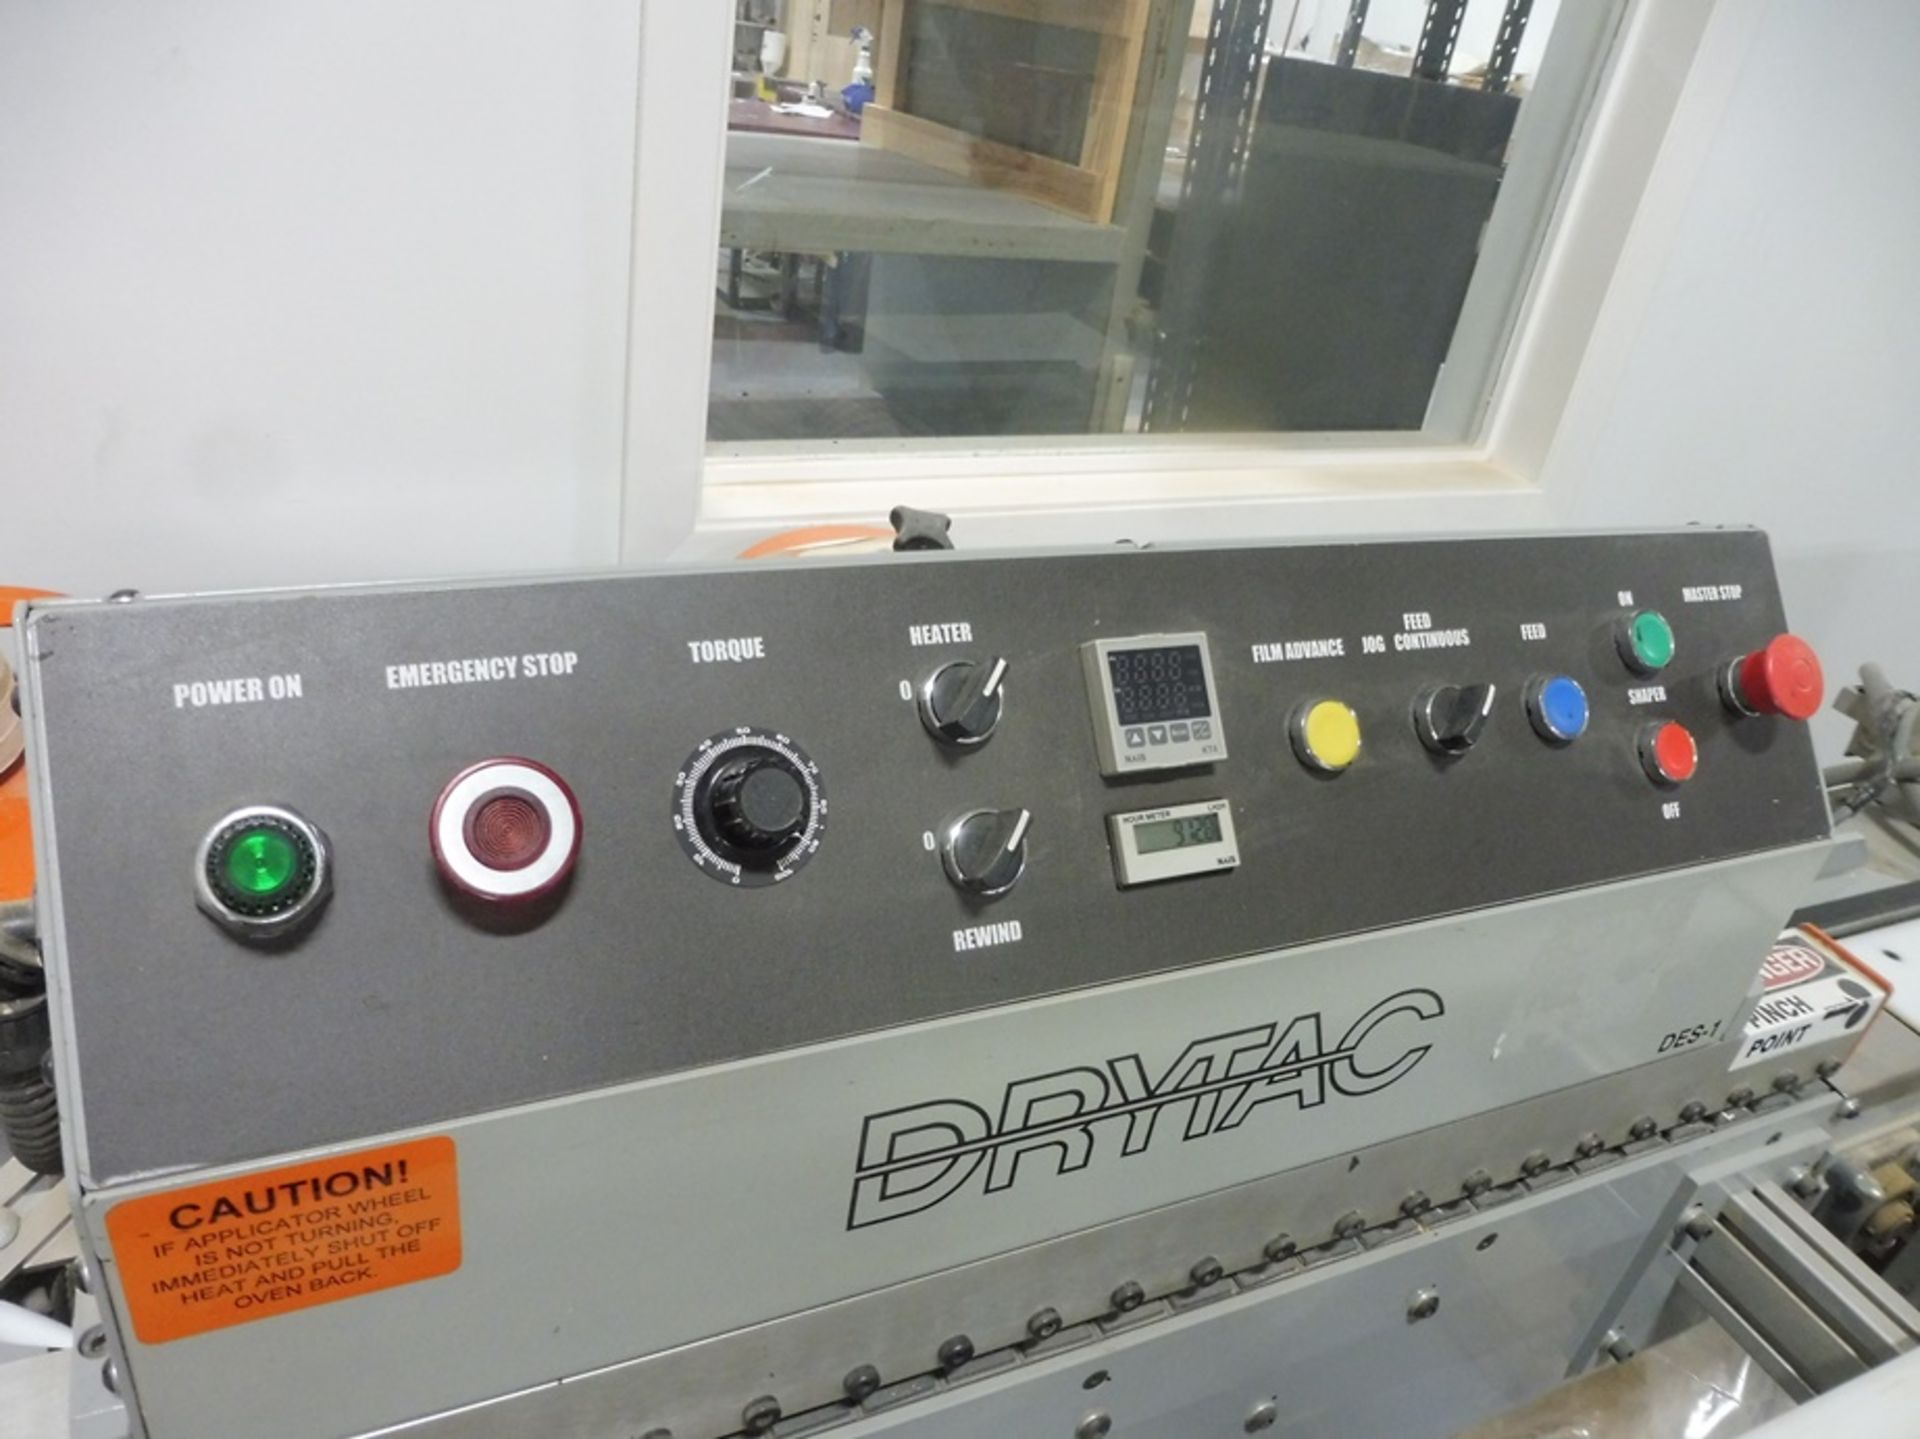 (2) DRYTAC CANADA "DES-1" Picture Frame Edge Foiling Machines, S/N: DES-1045, DES-1054, (North - Image 3 of 4